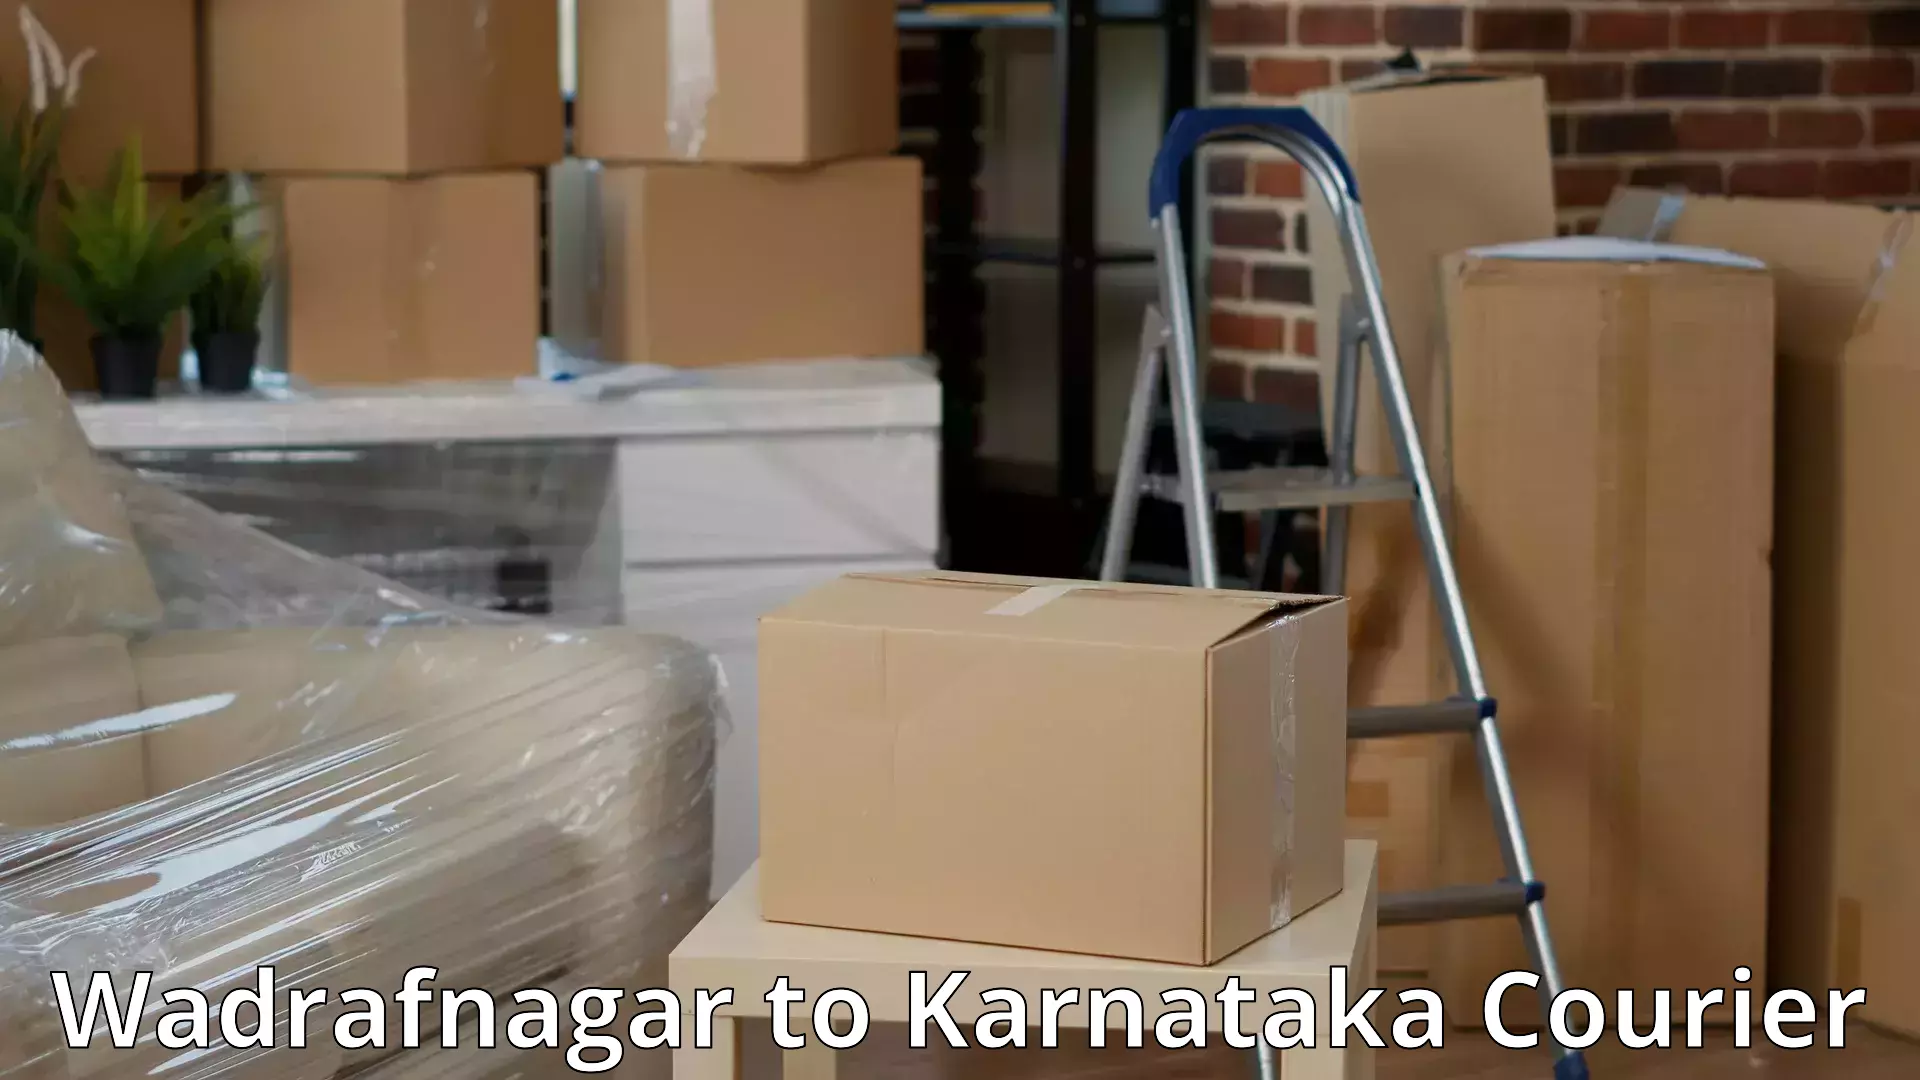 Furniture moving experts Wadrafnagar to Thirthahalli